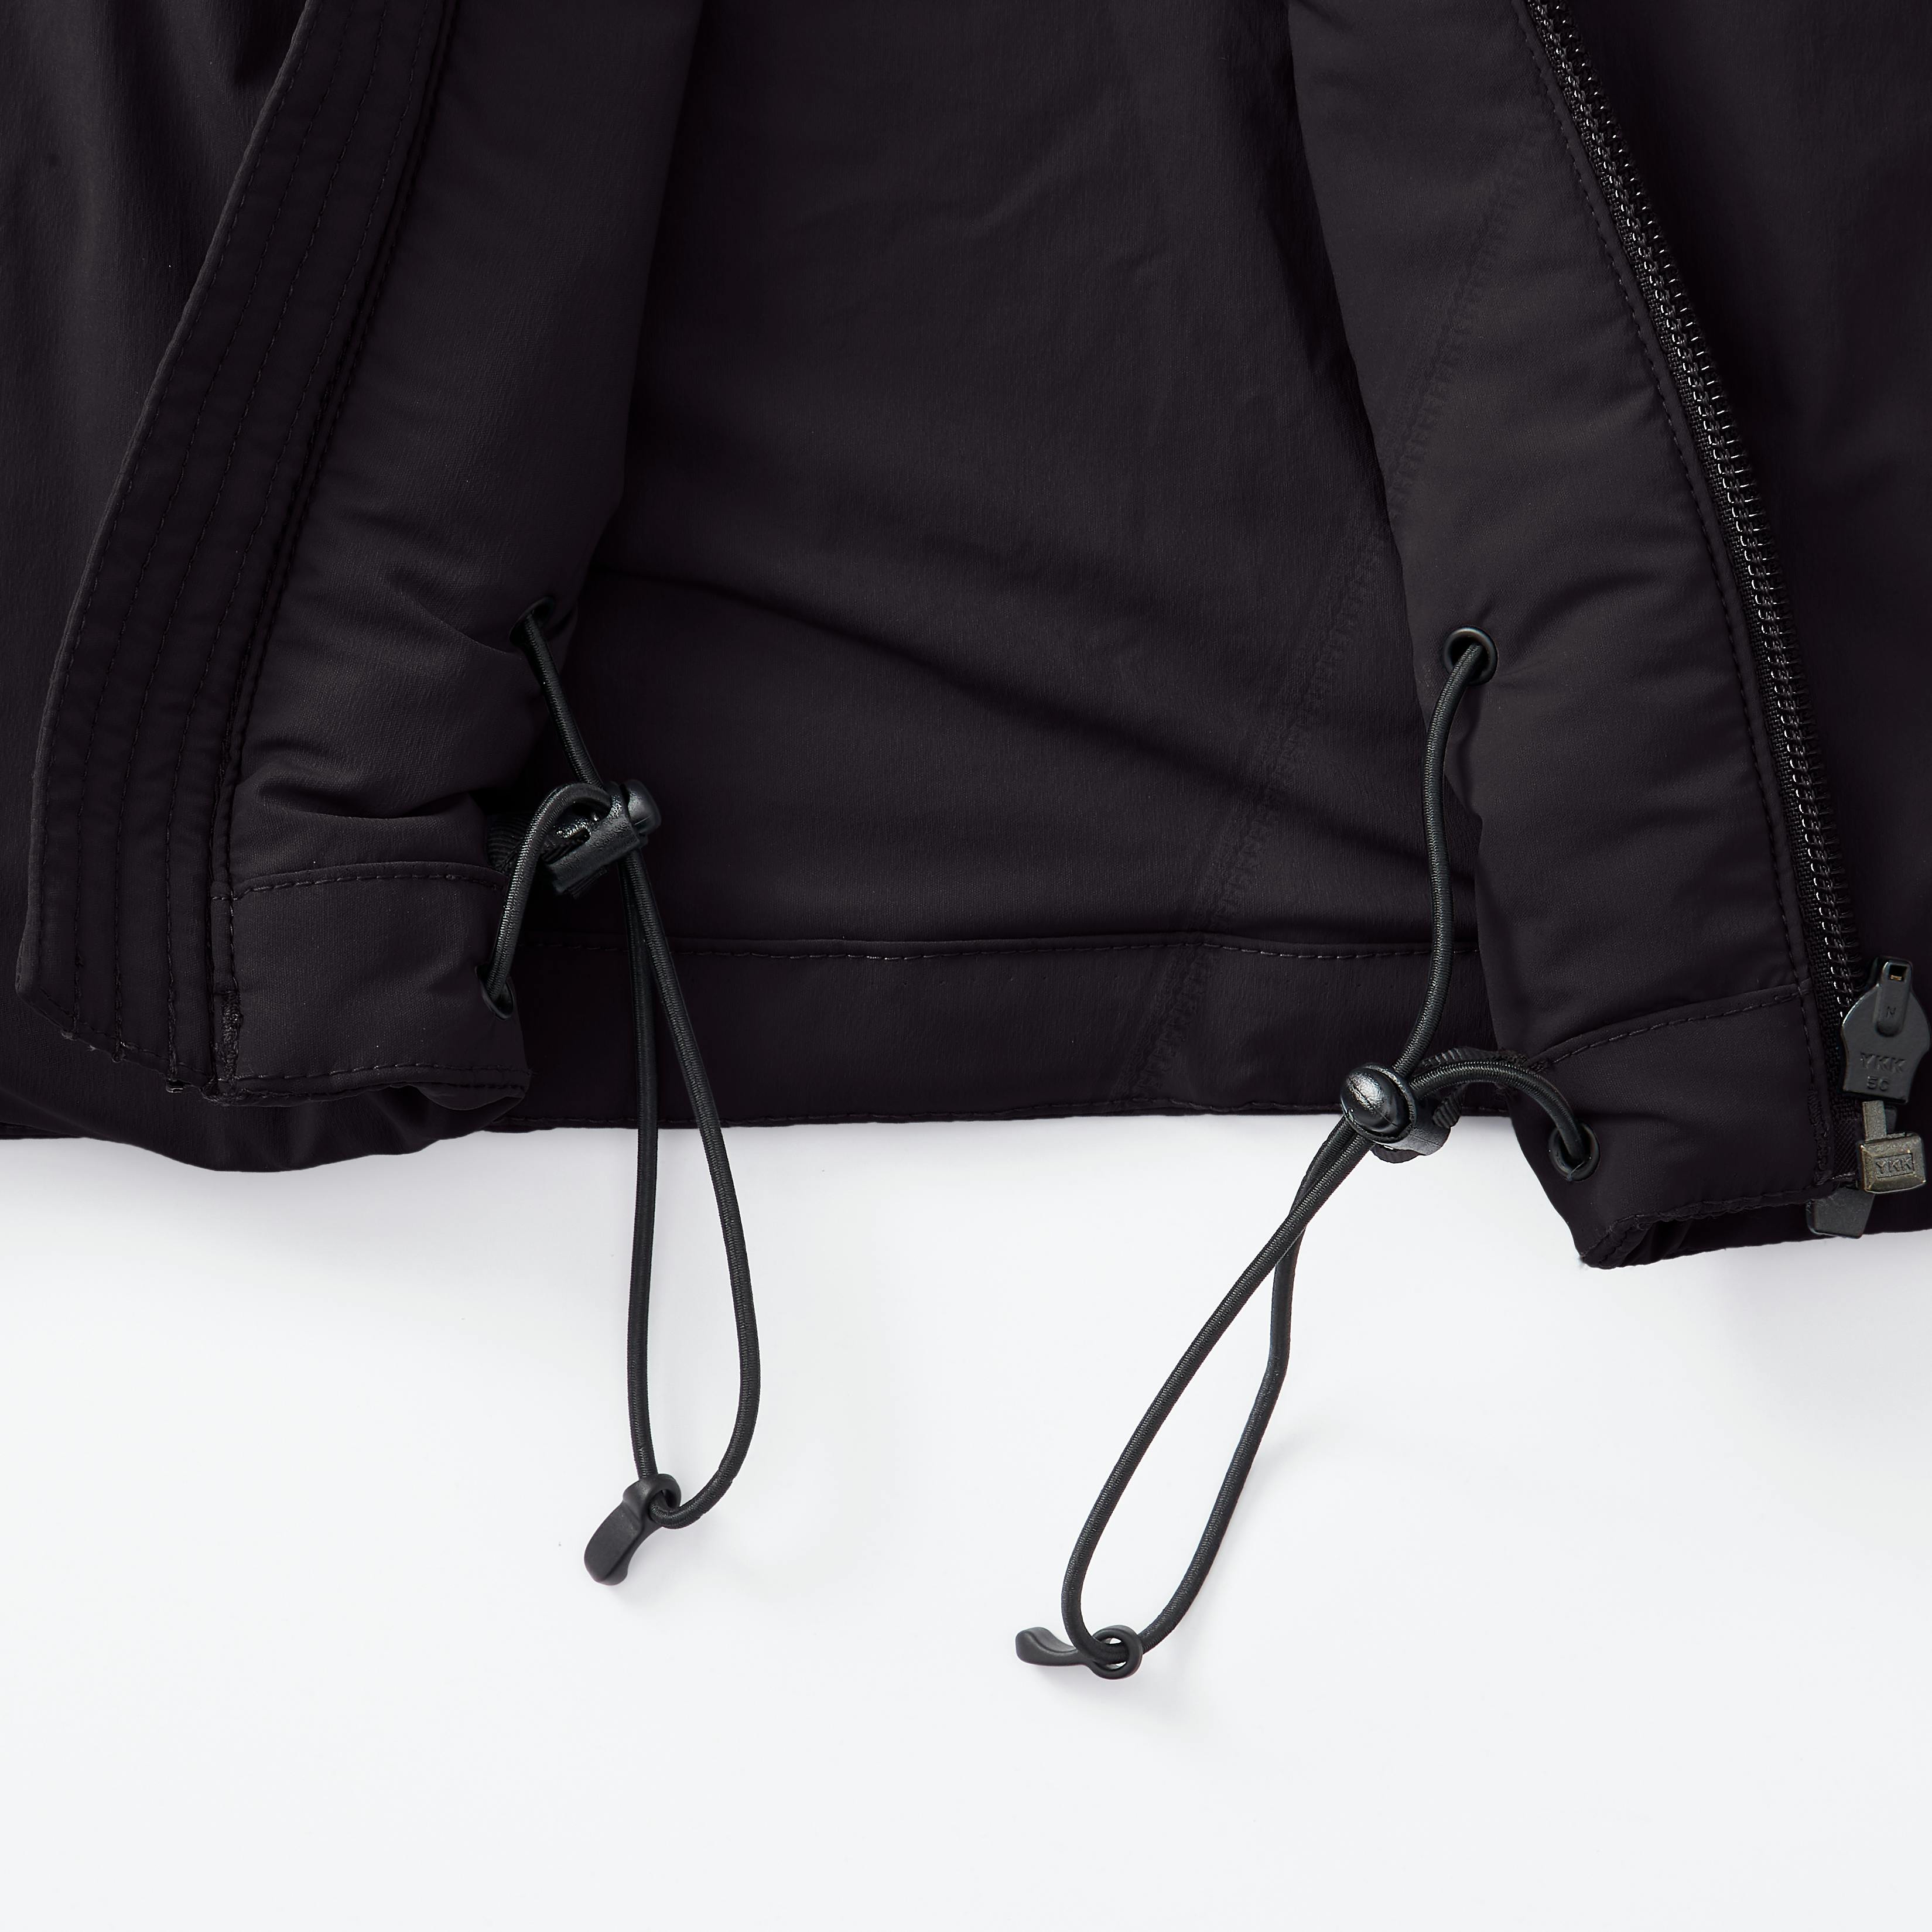 Proof Nova Series Insulated Jacket